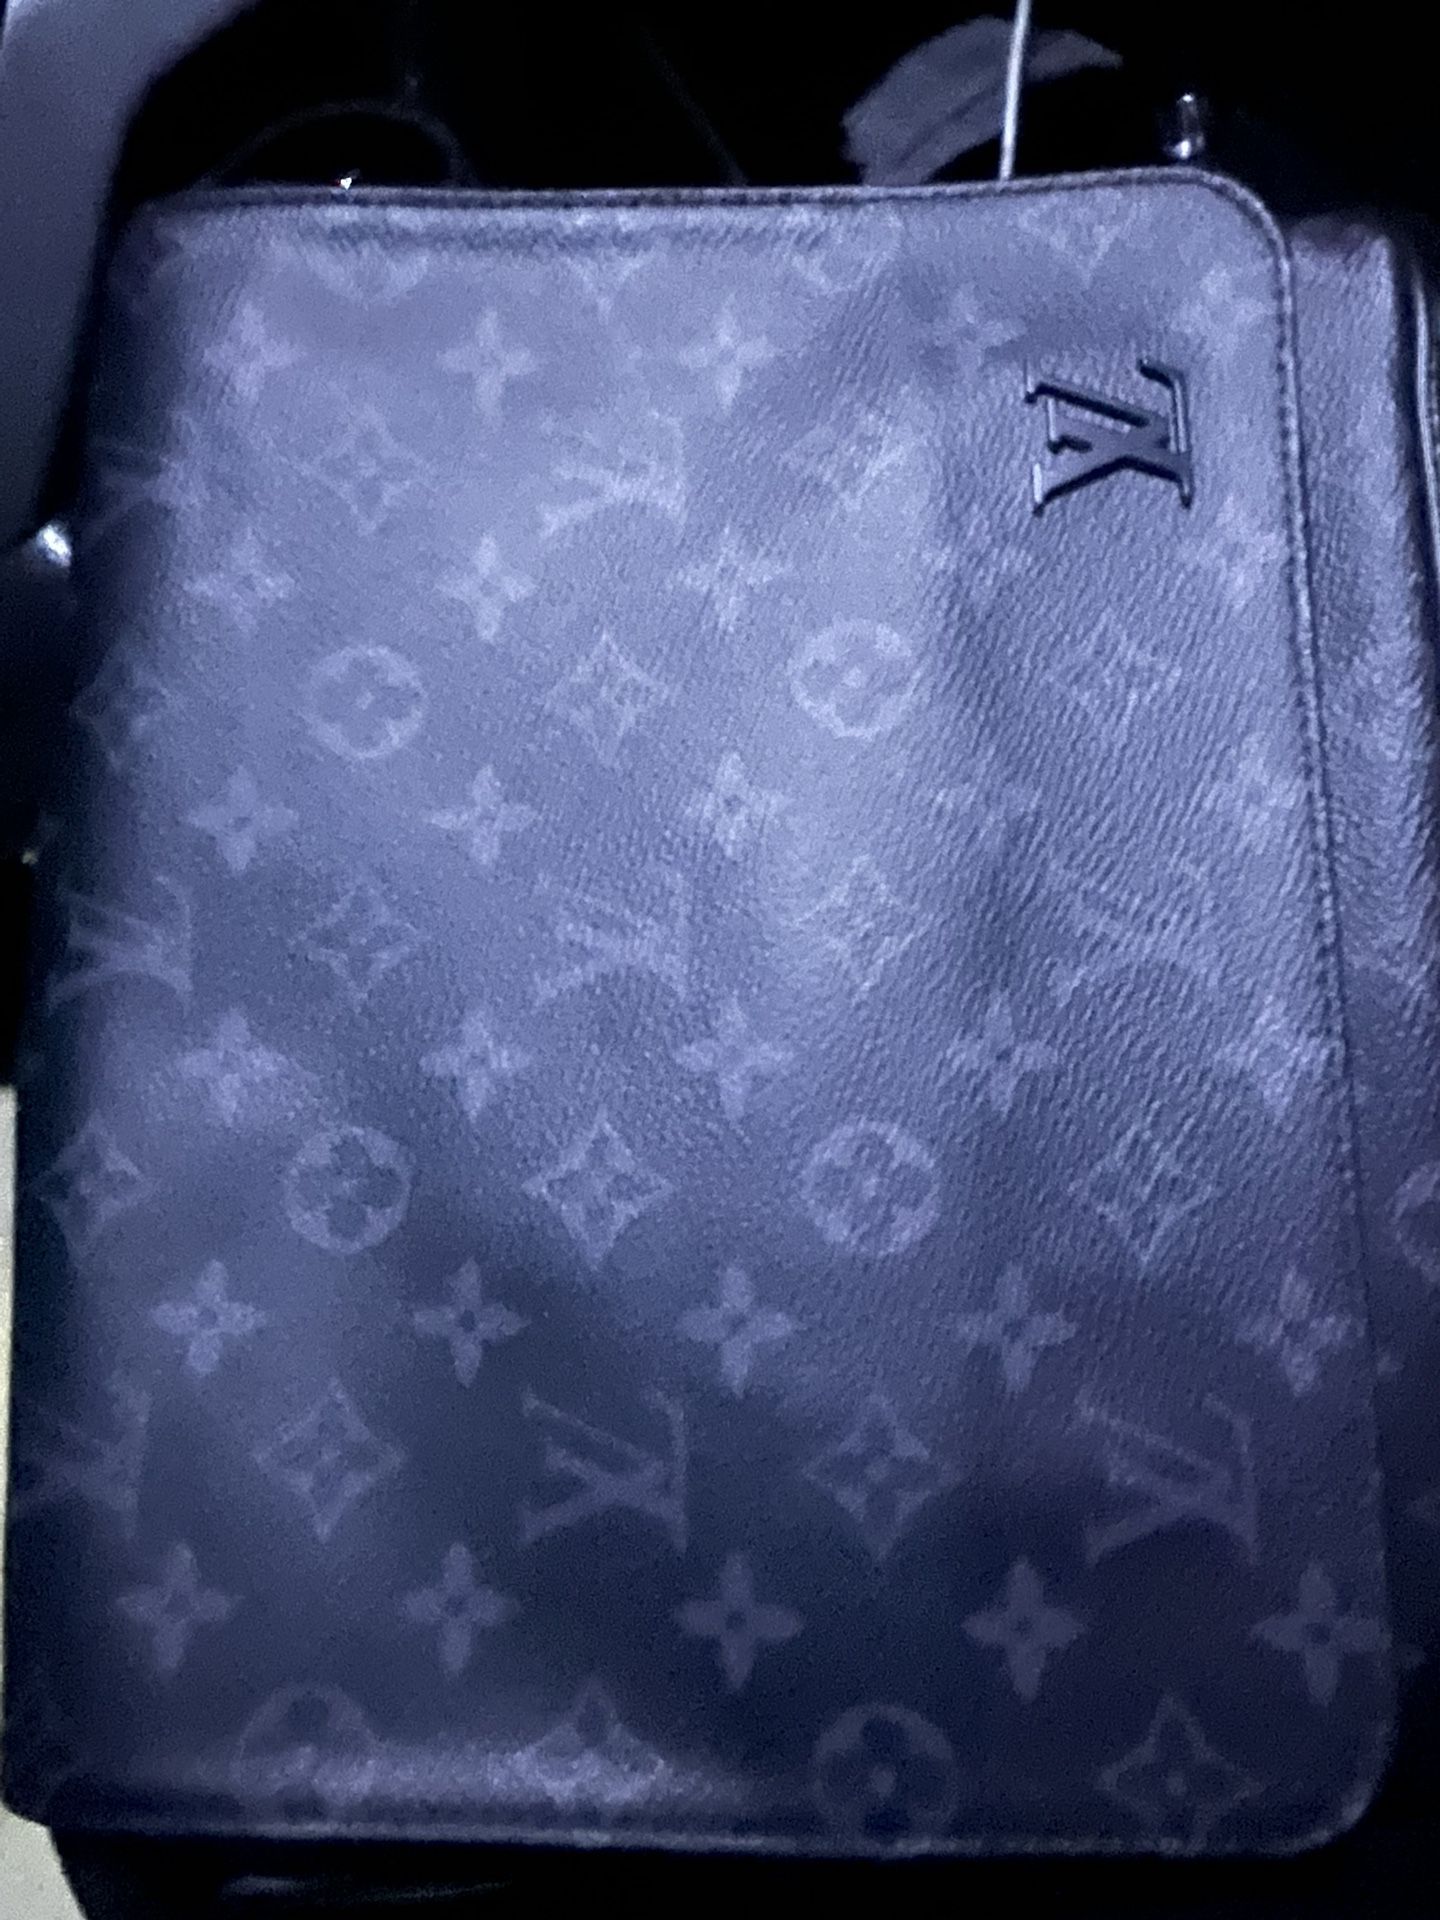 Louis Vuitton Bag Men LV Bag for Sale in Sunny Isles Beach, FL - OfferUp